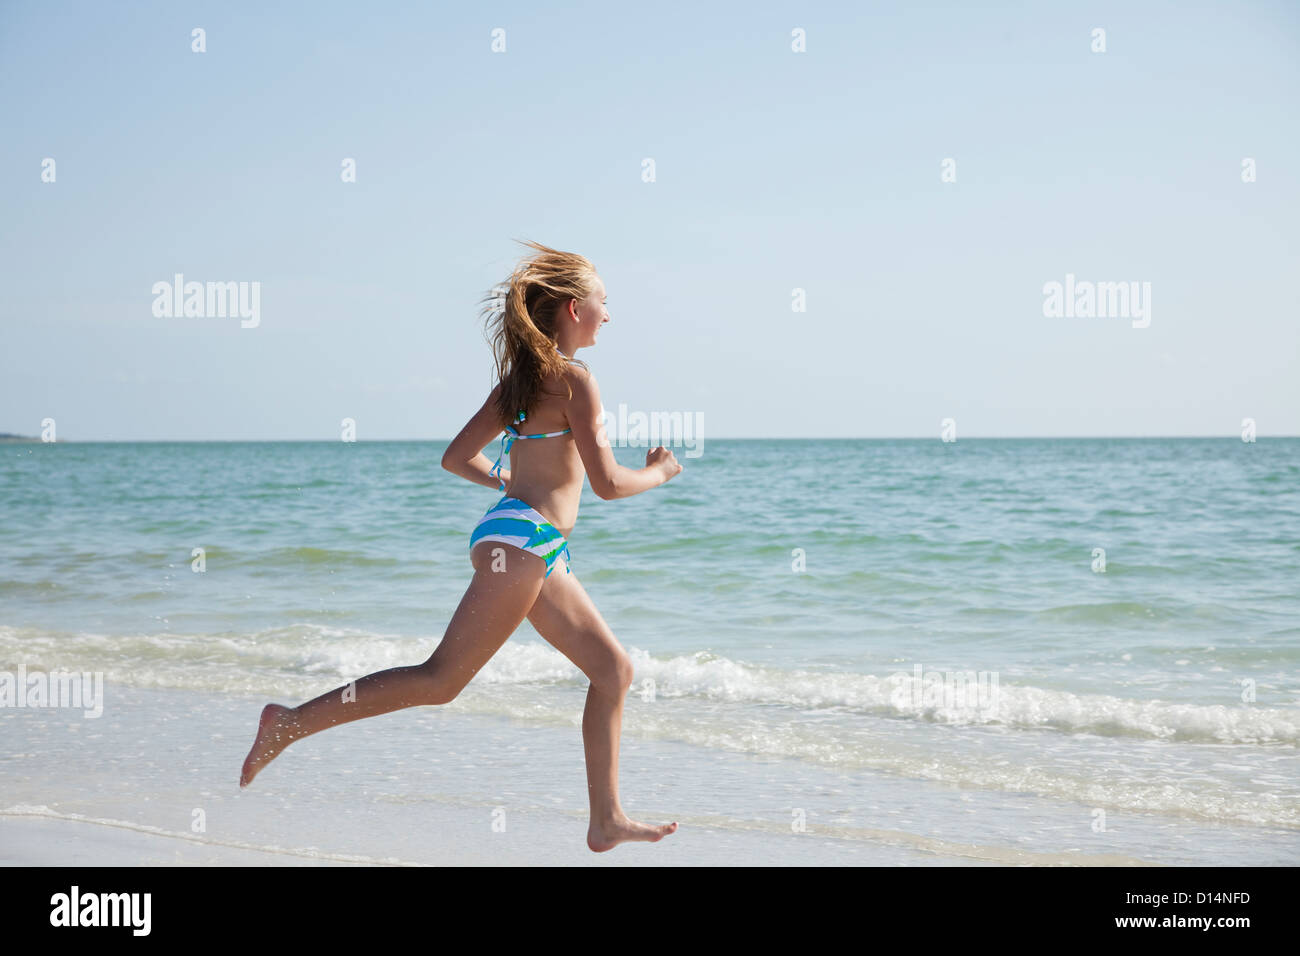 USA, Florida, St. Petersburg, girl (12-13) running along beach Stock Photo